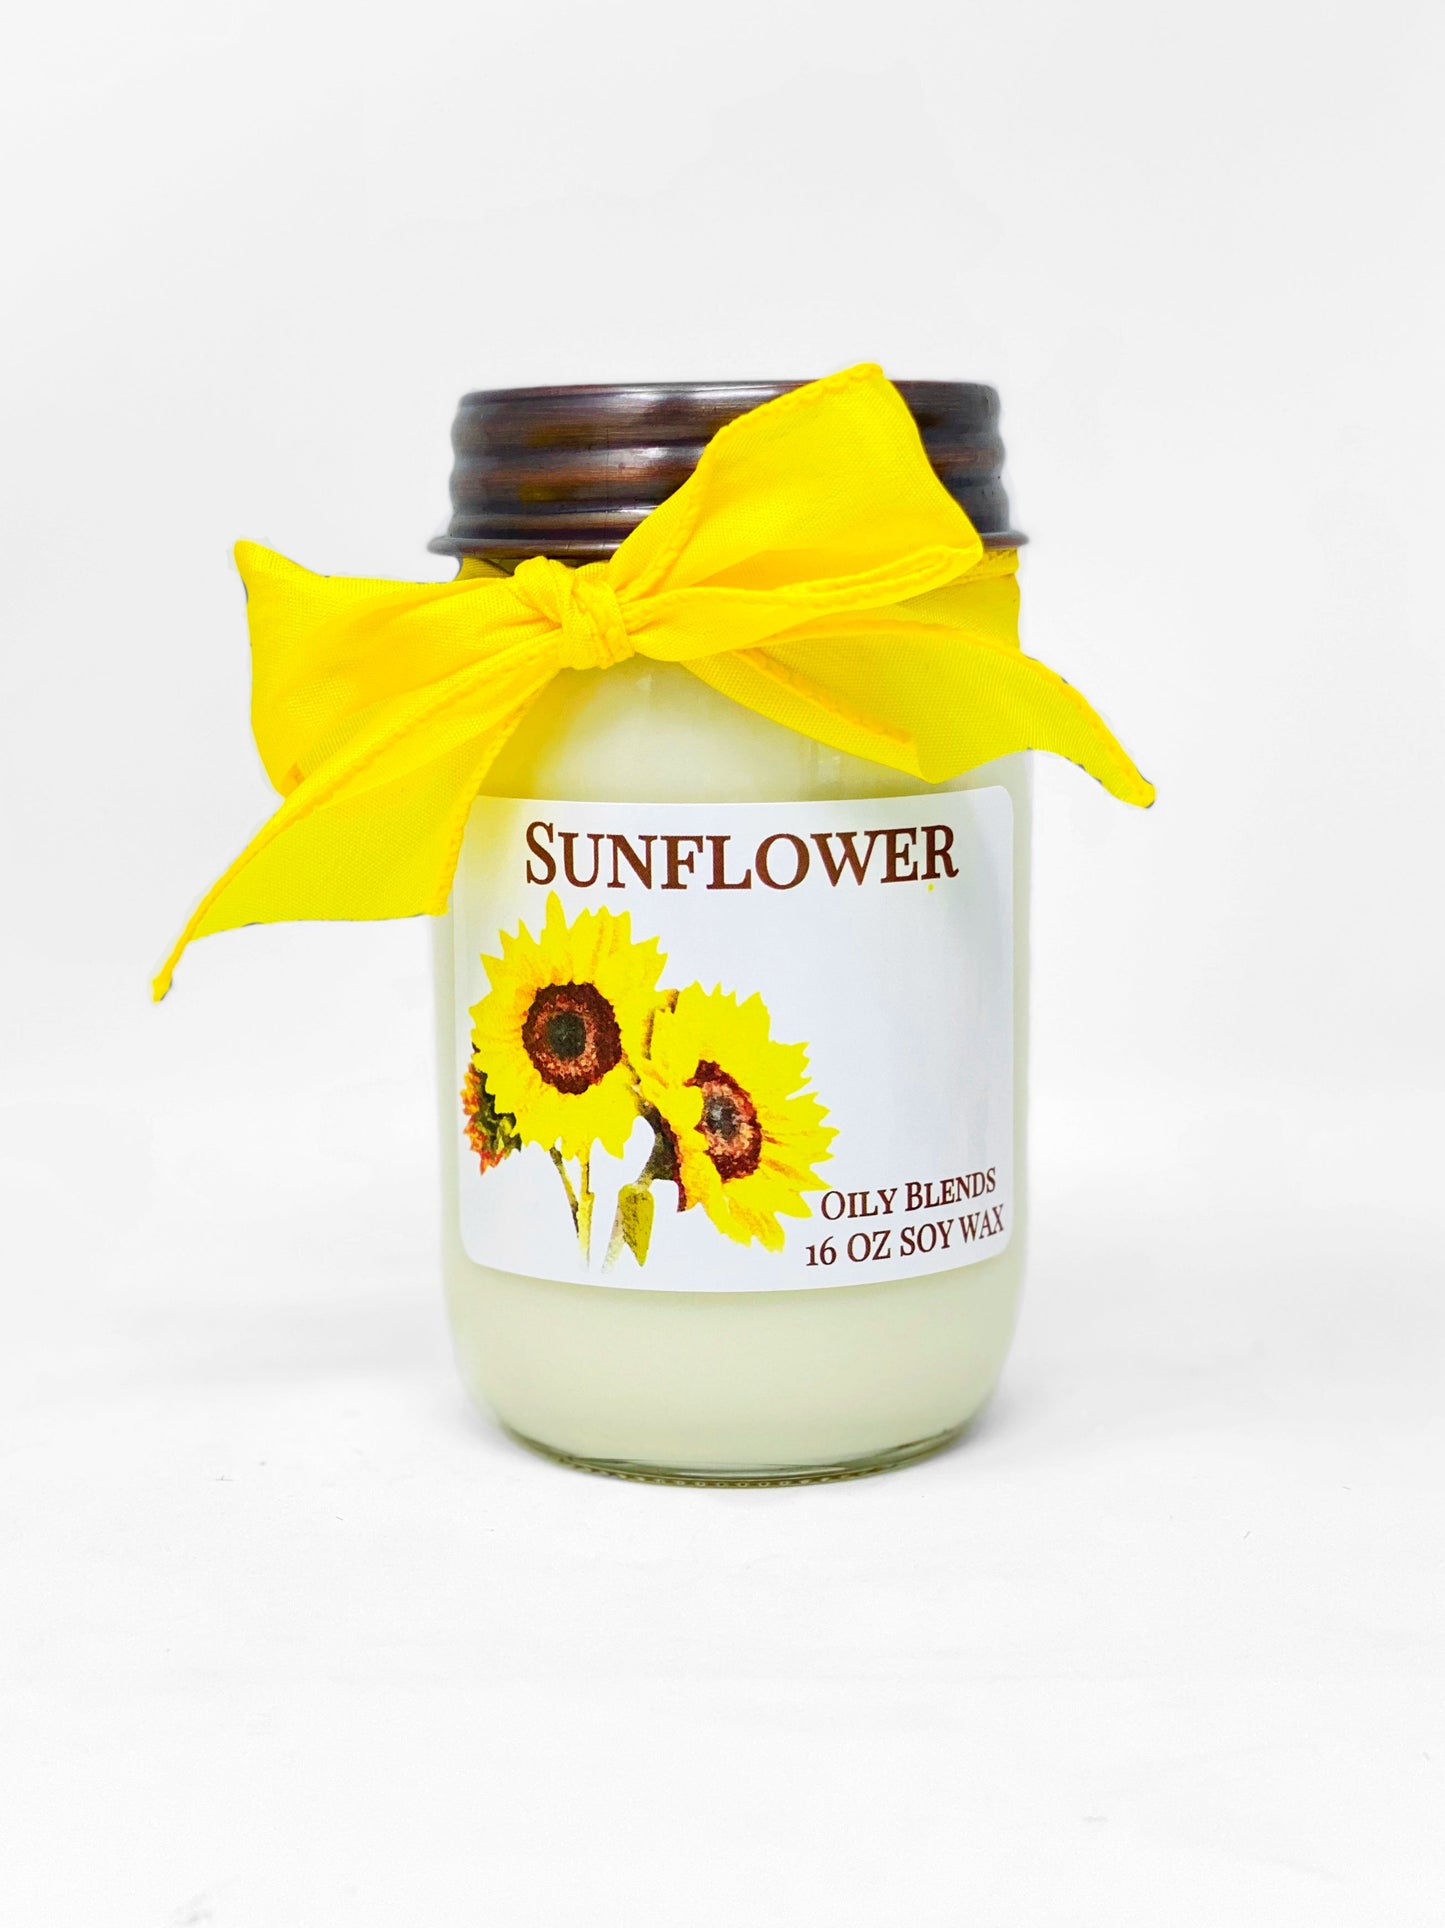 Jumbo Sunflower - 100 Hour Burn Time Soy Wax Candles and 3 oz wax melt